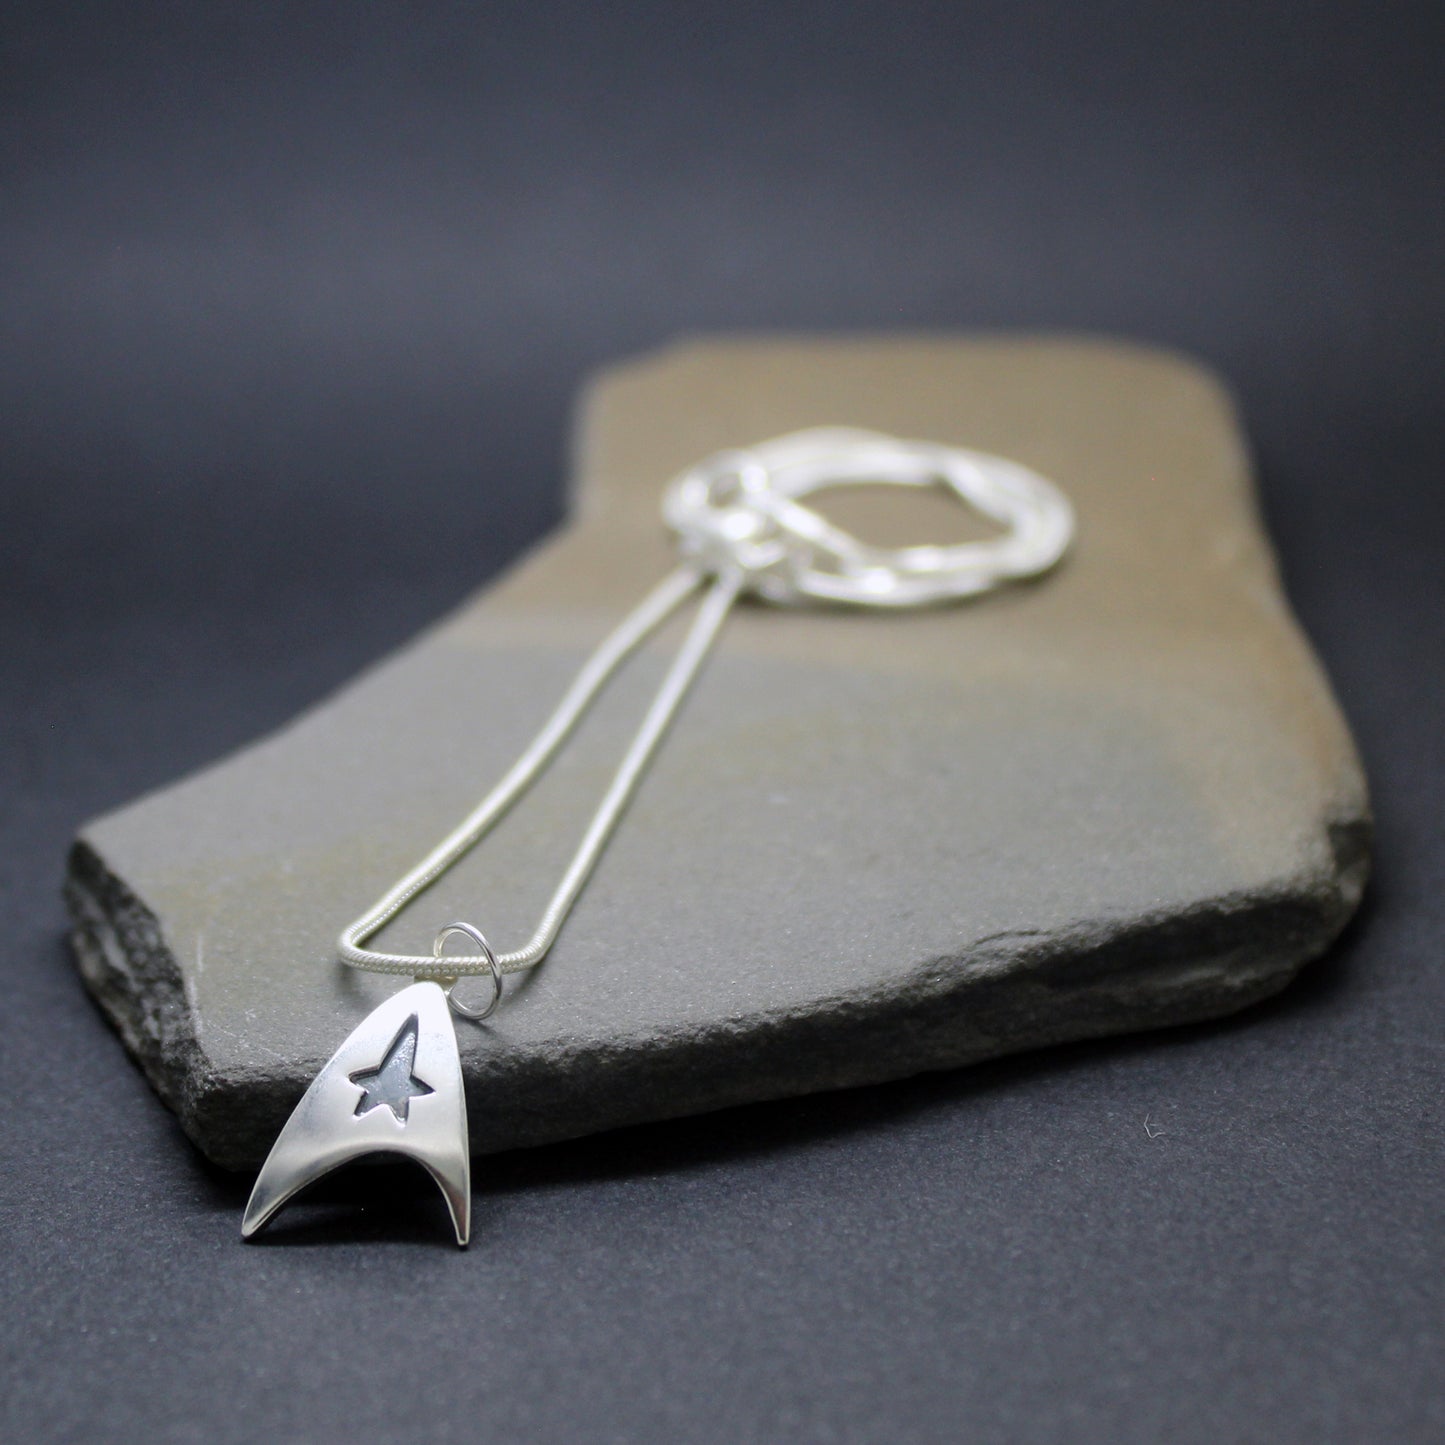 Star Trek Insignia Delta de la Flota Estelar colgante de plata 925